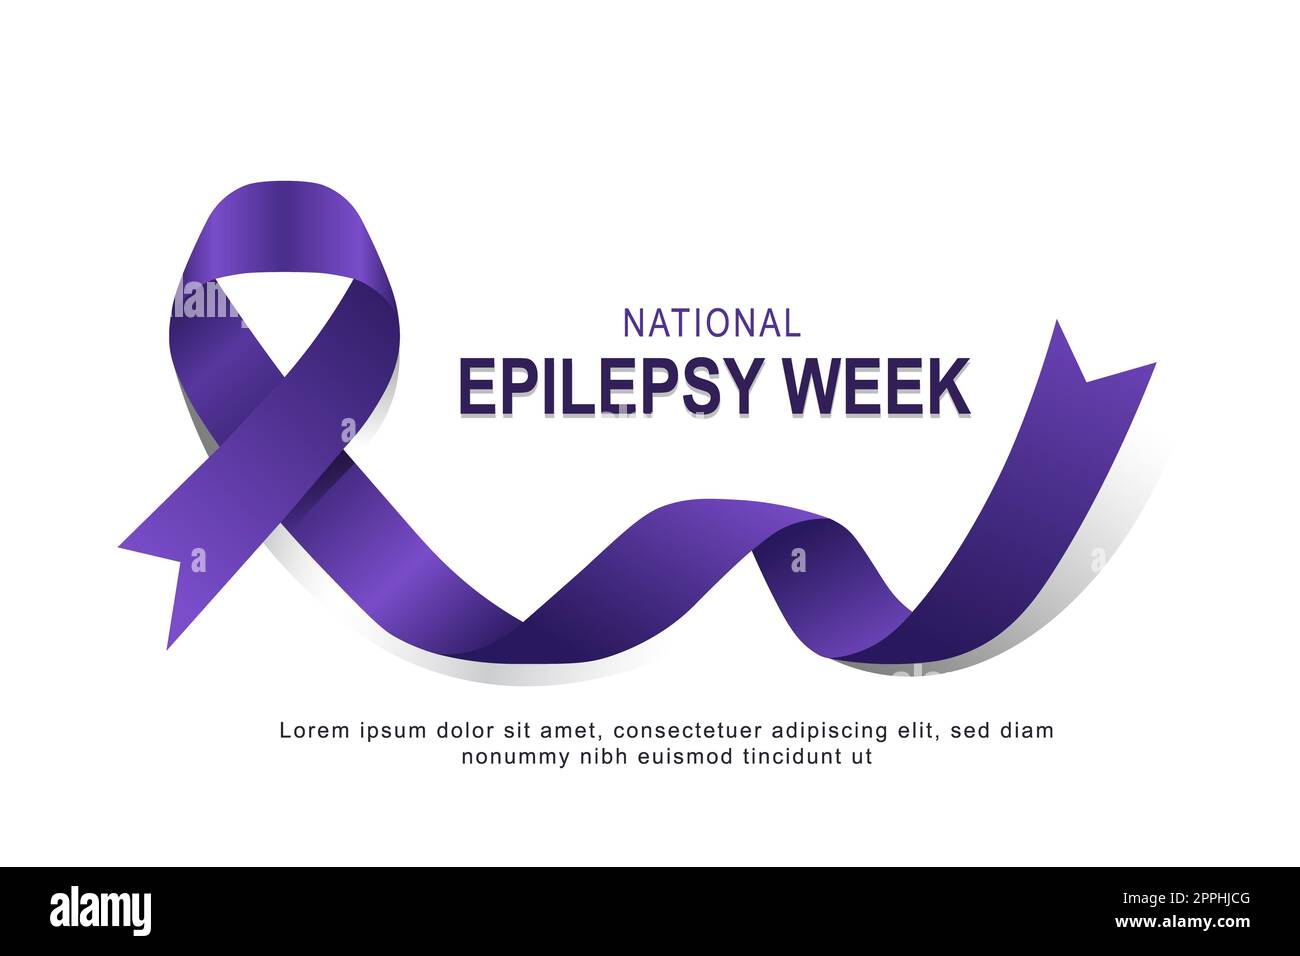 National Epilepsy Week background. Health, Awareness, Educational